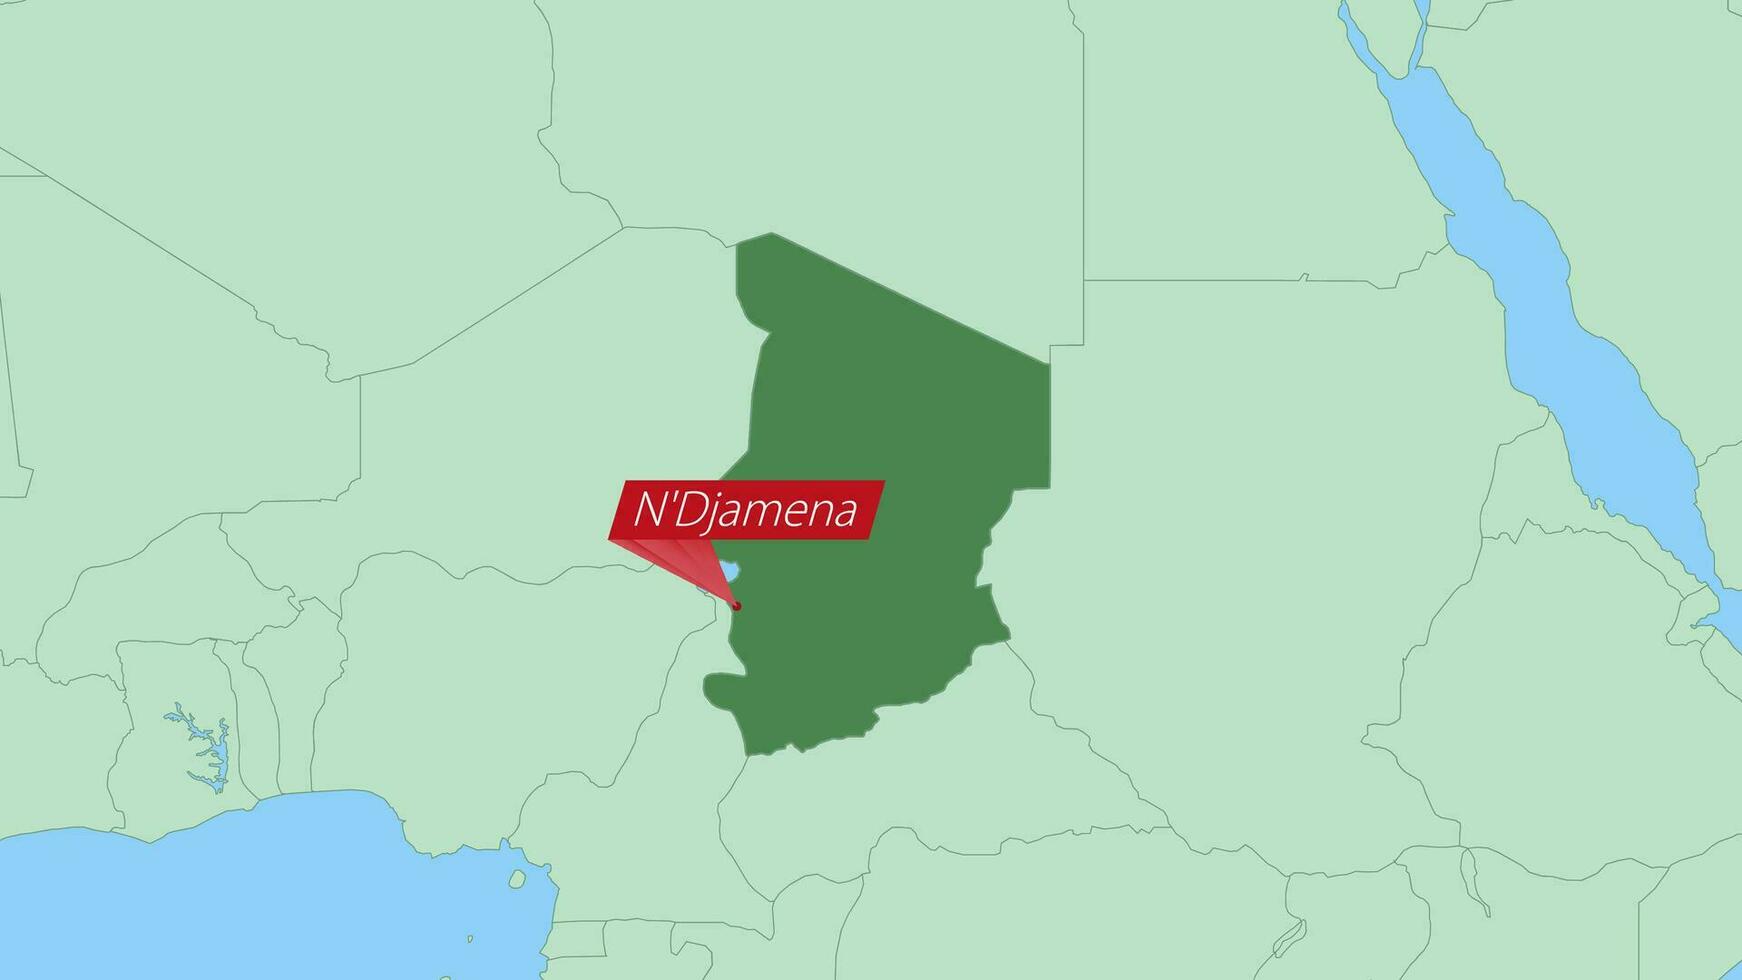 mapa de Chad con alfiler de país capital. vector